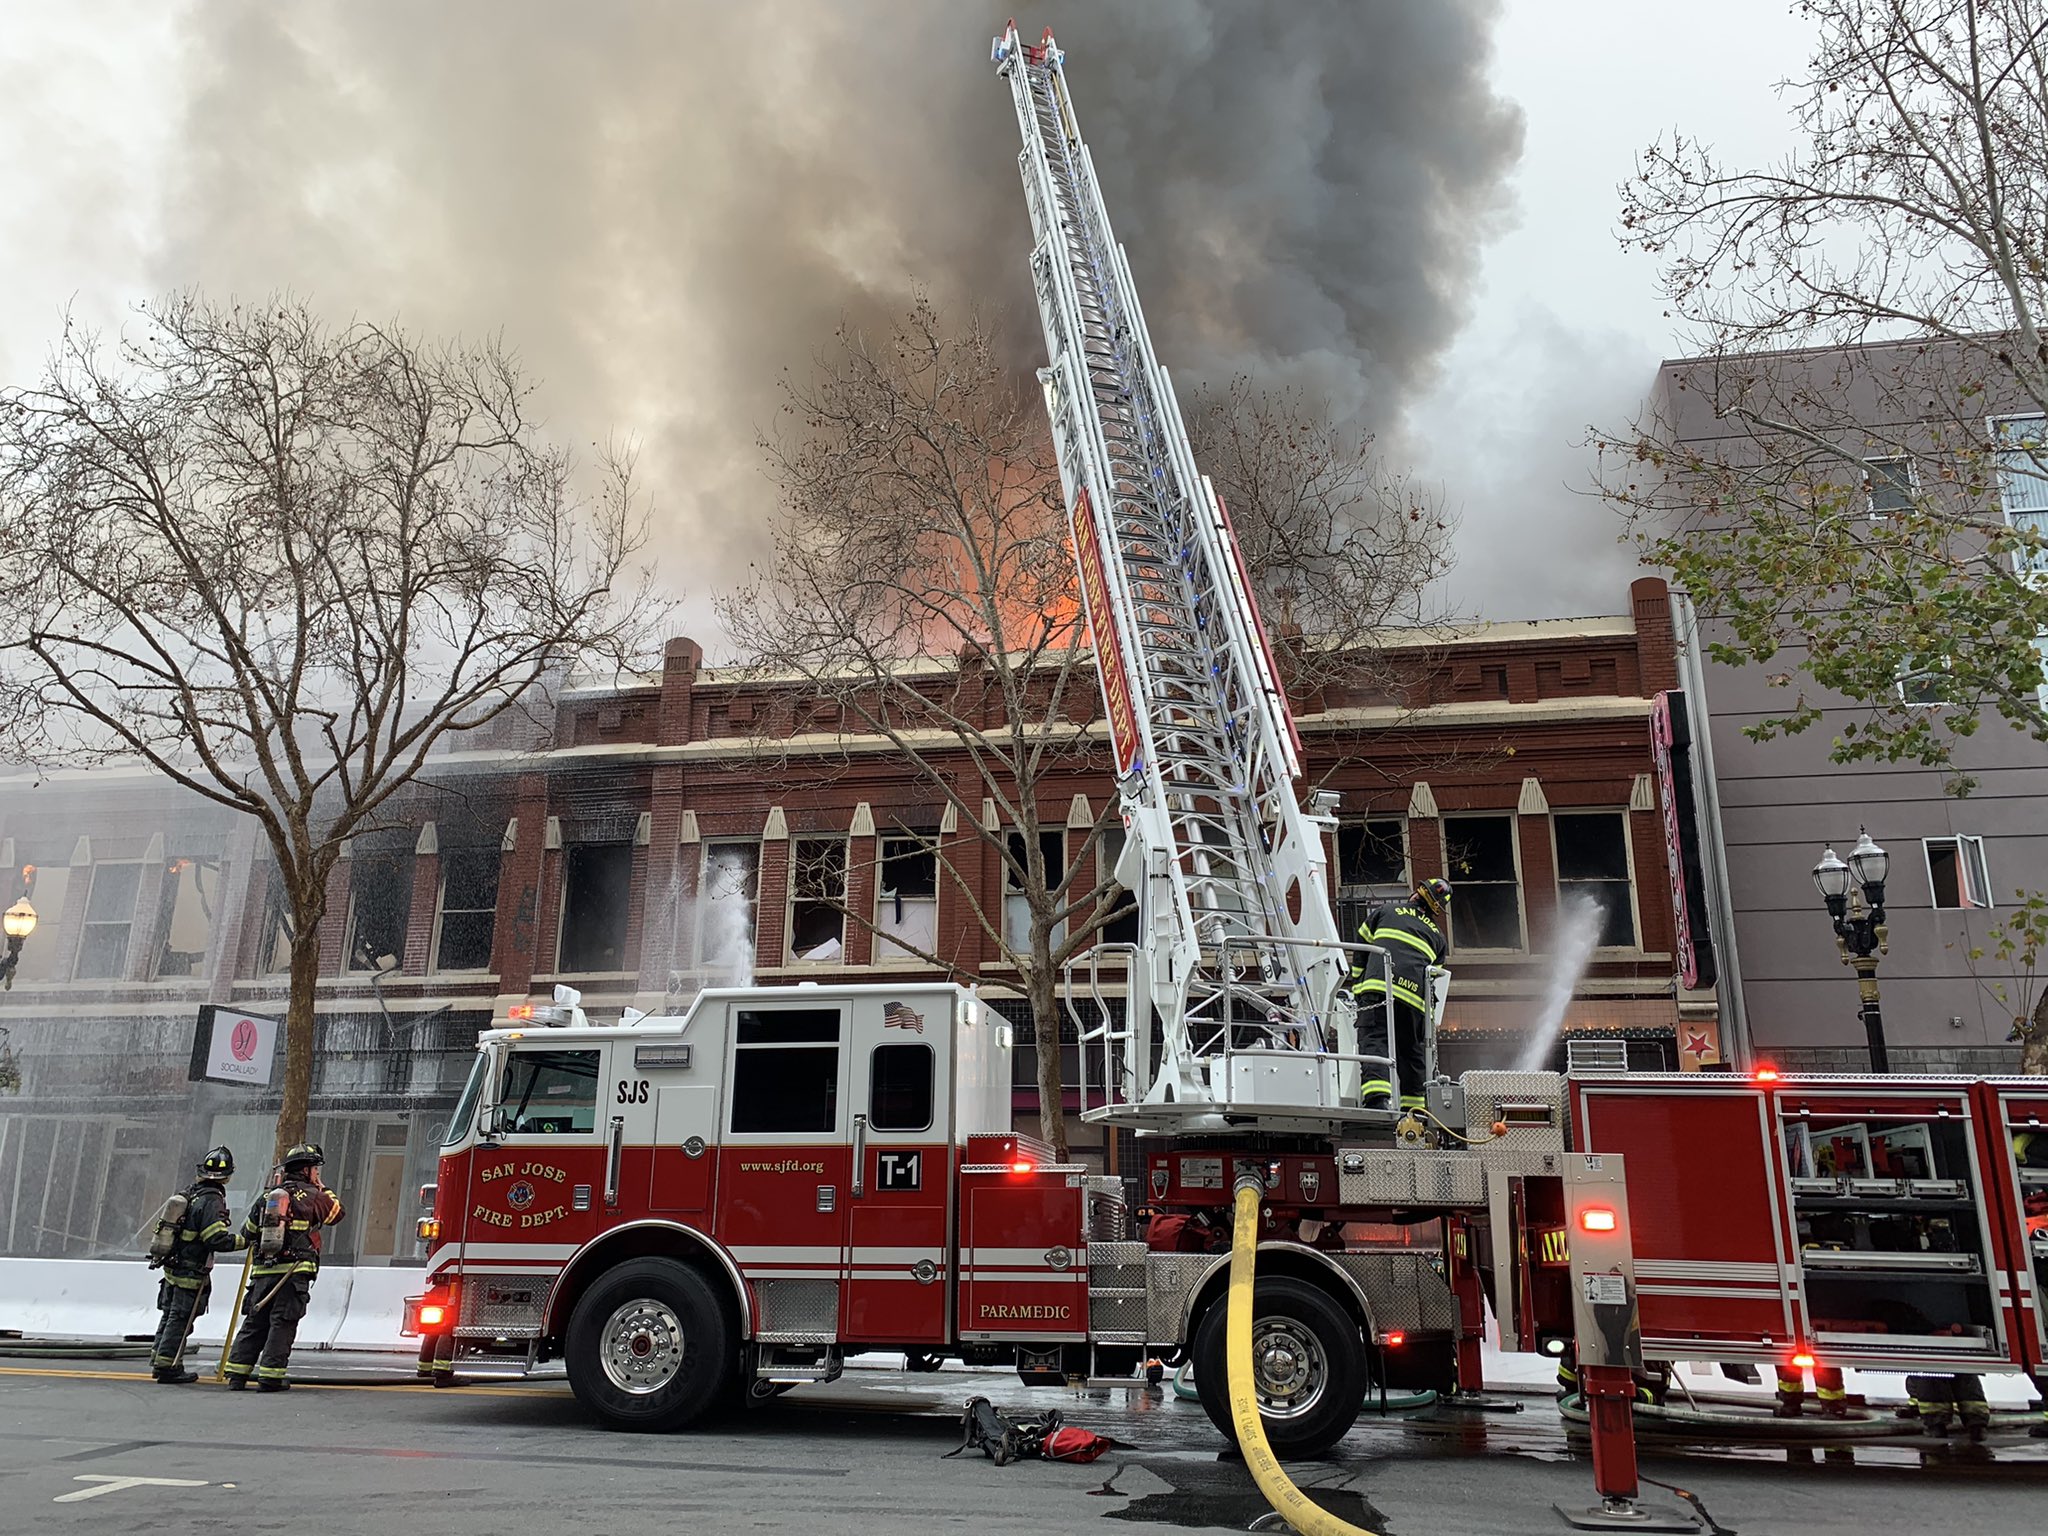 Massive fire engulfs downtown San Jose building, damaging city’s